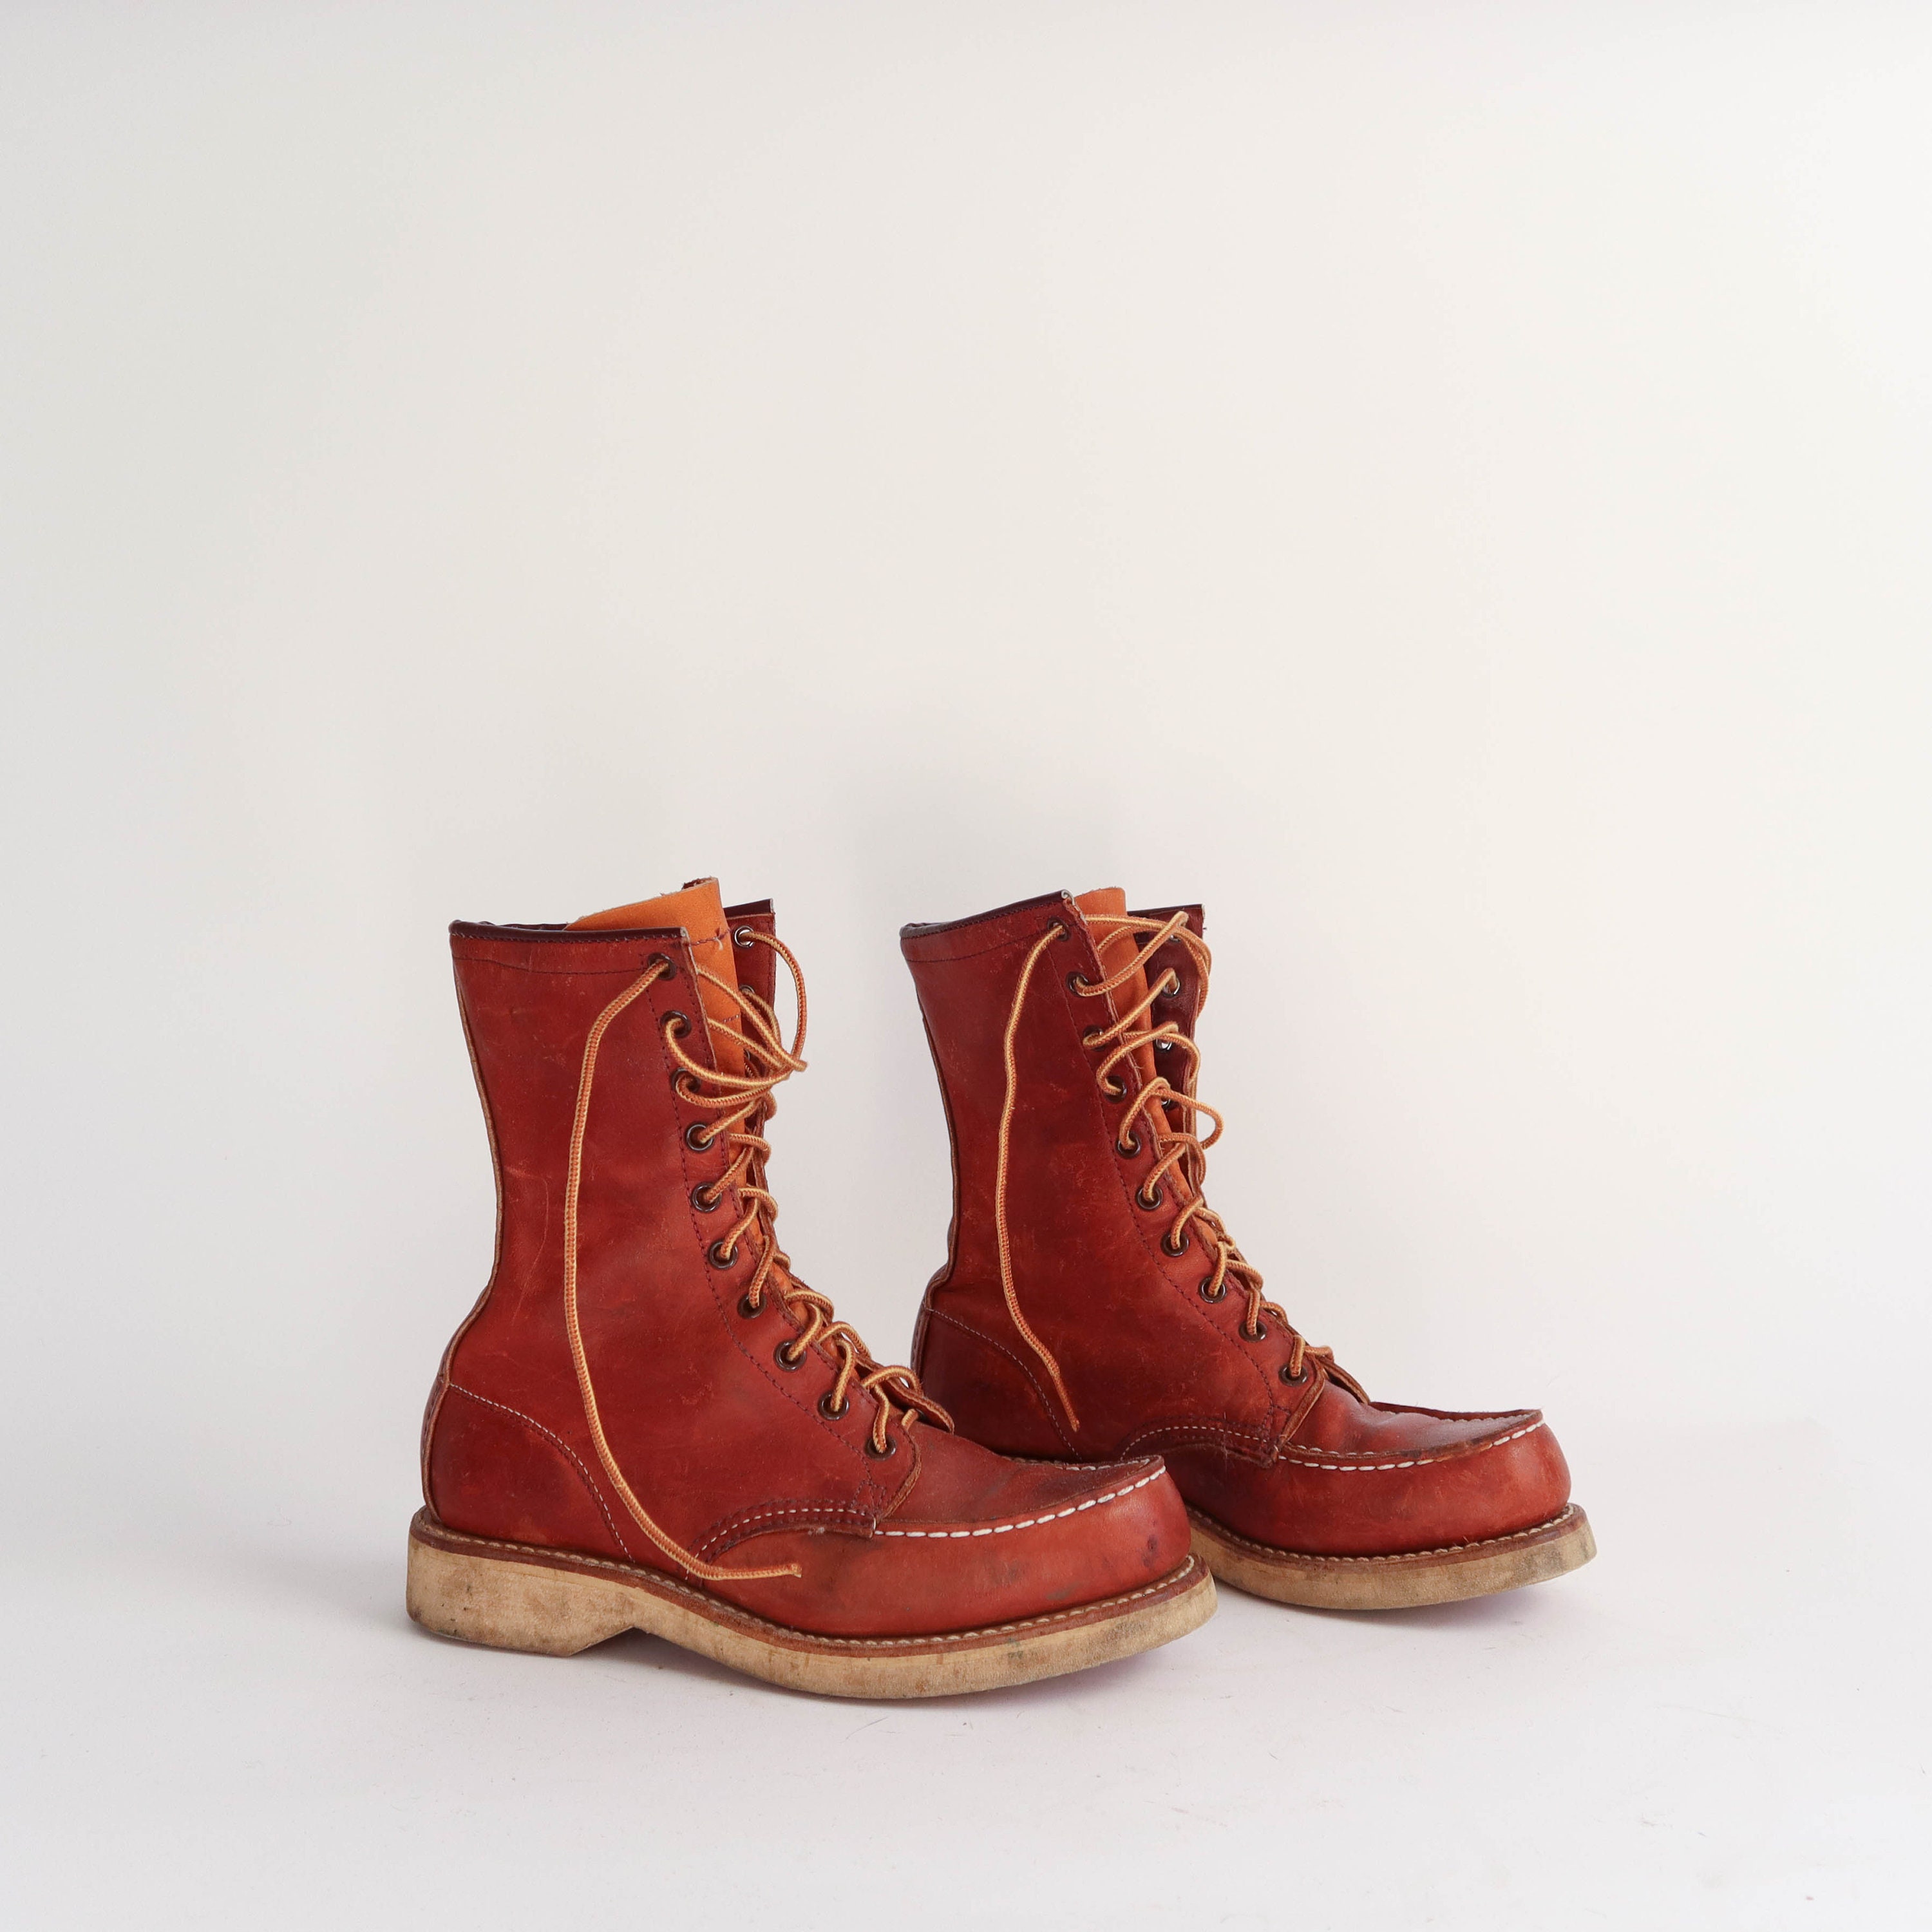 hudson bay boots sale